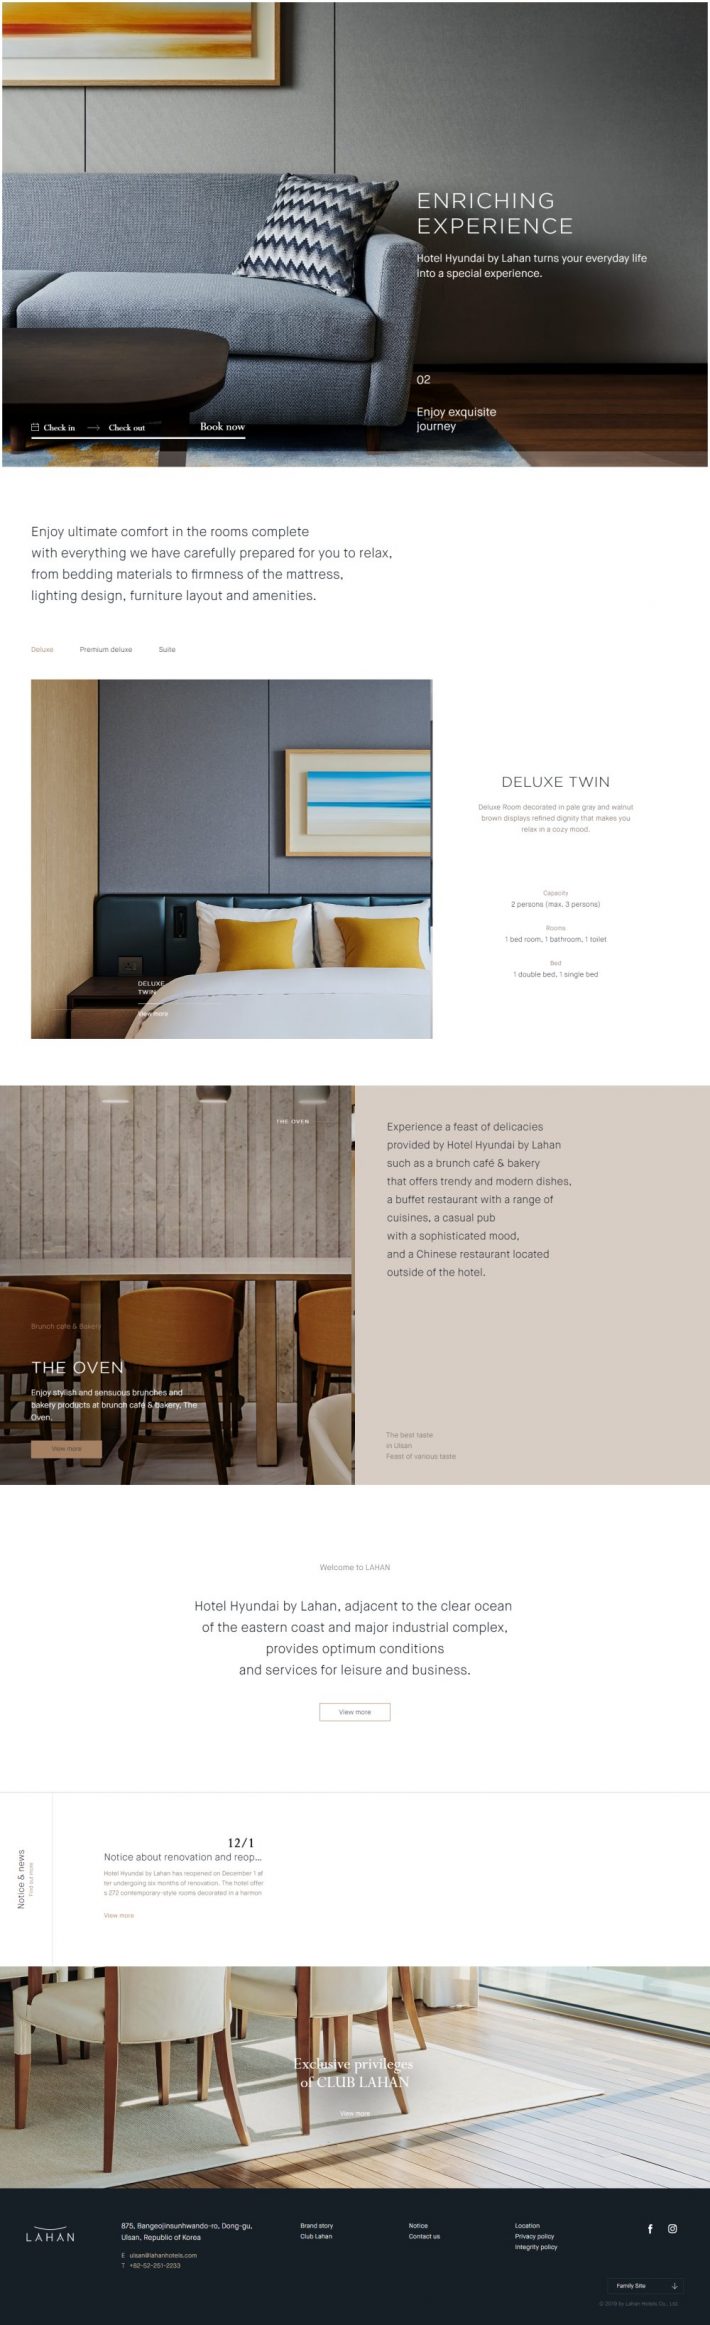 Hotel-Web-Design-Inspiration-004